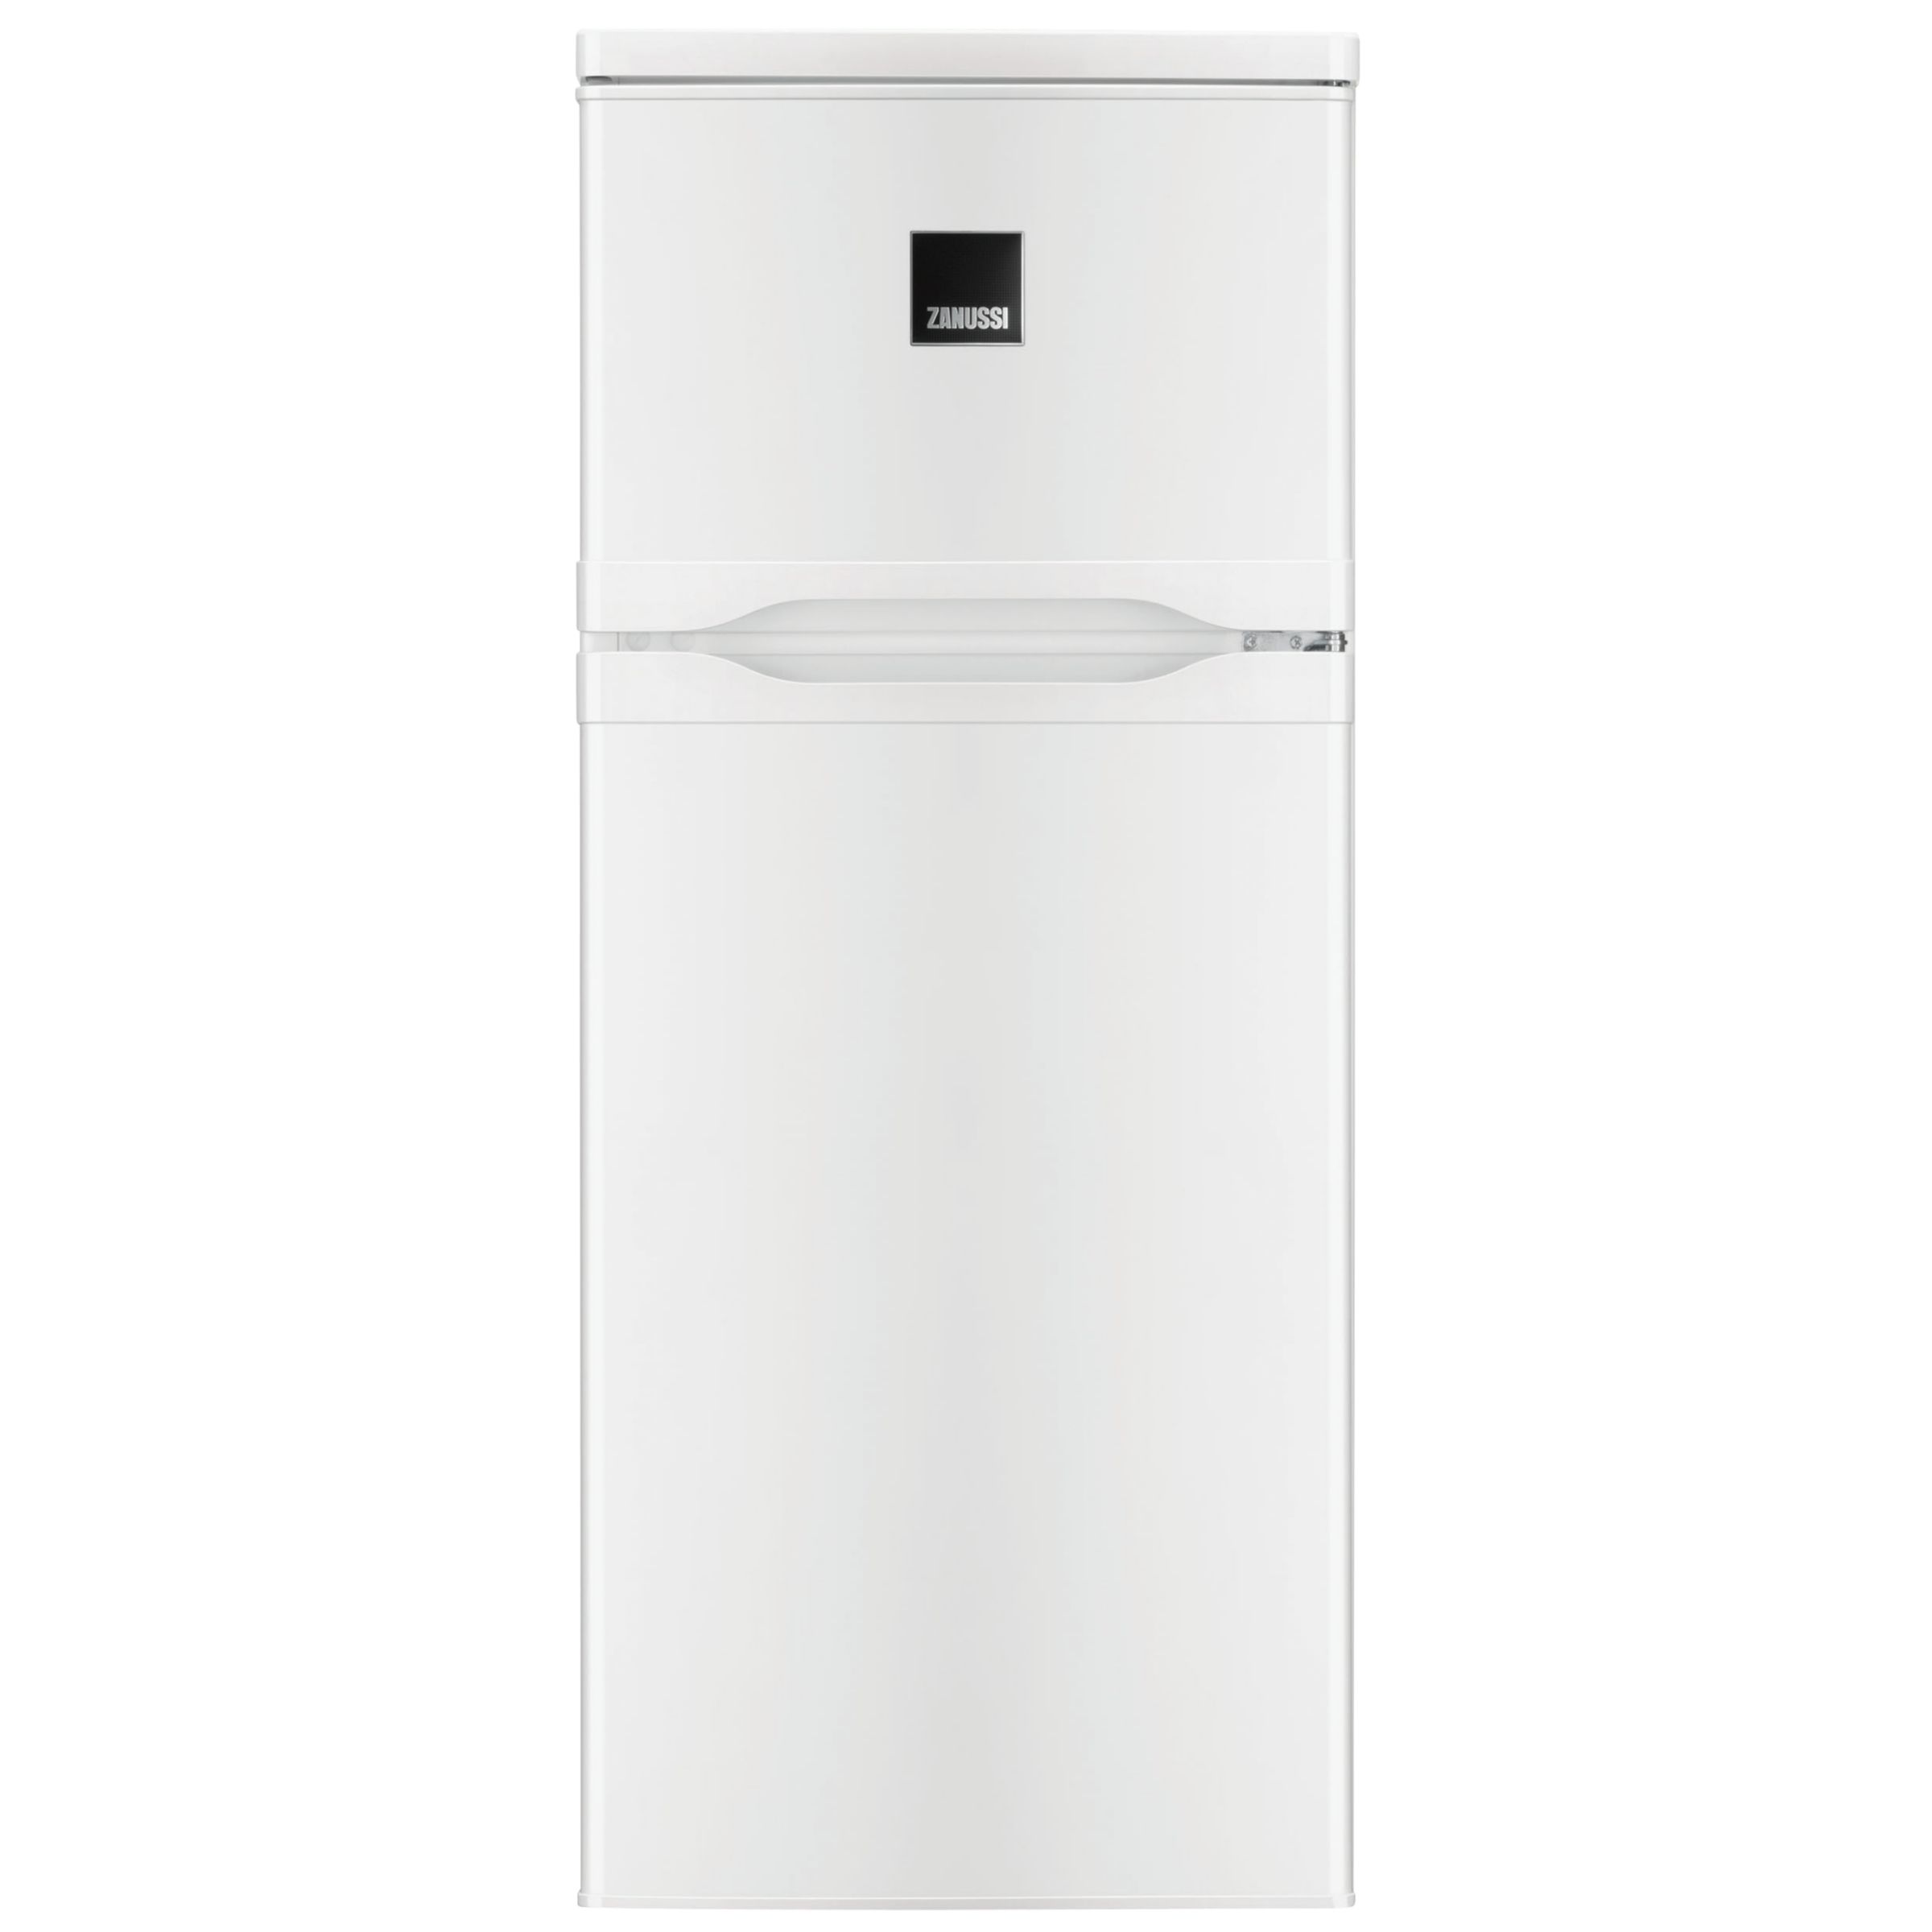 Zanussi ZRT18101WA Freestanding Fridge Freezer, A+ Energy Rating, 50cm Wide, White